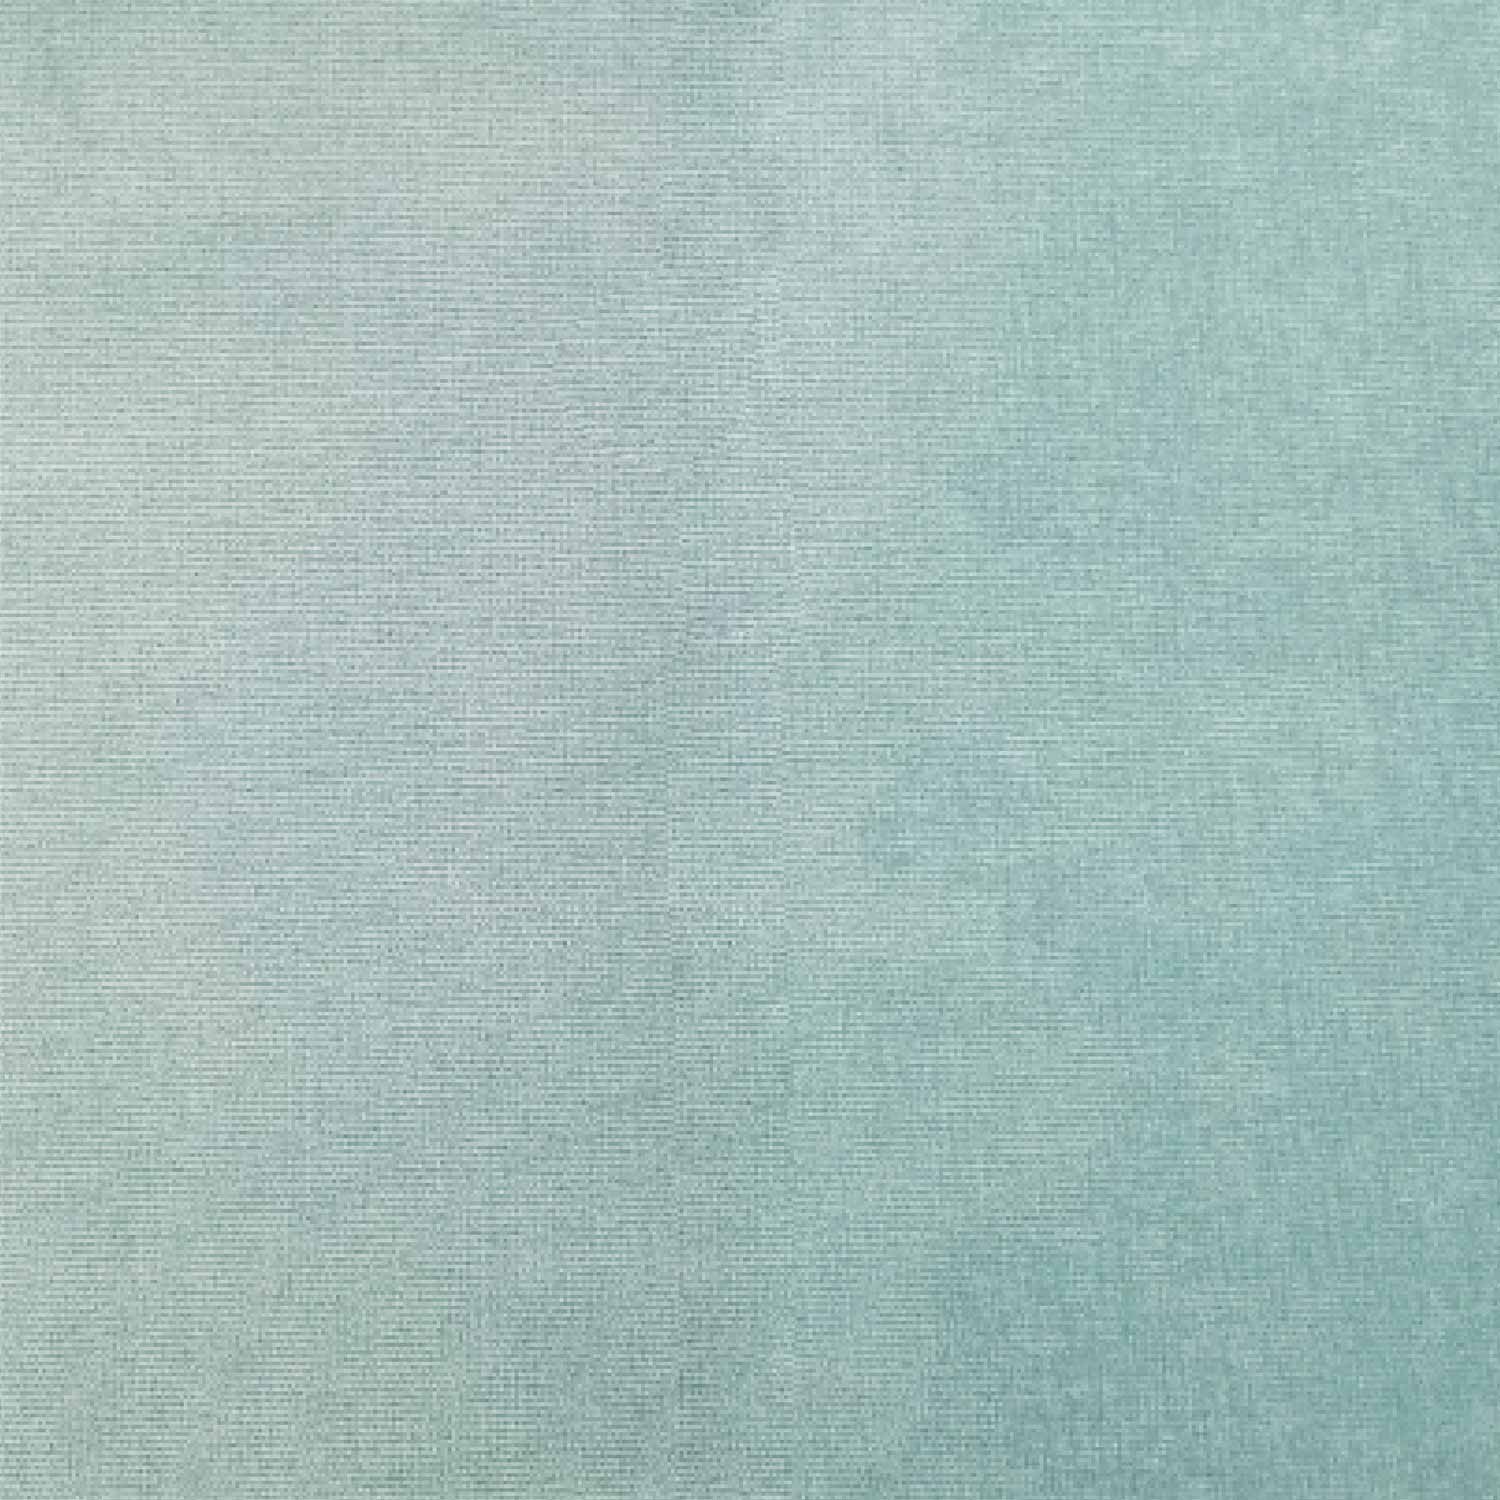 Hillsdale Sophia Tufted Backless Vanity Stool - White/Spa Blue Fabric